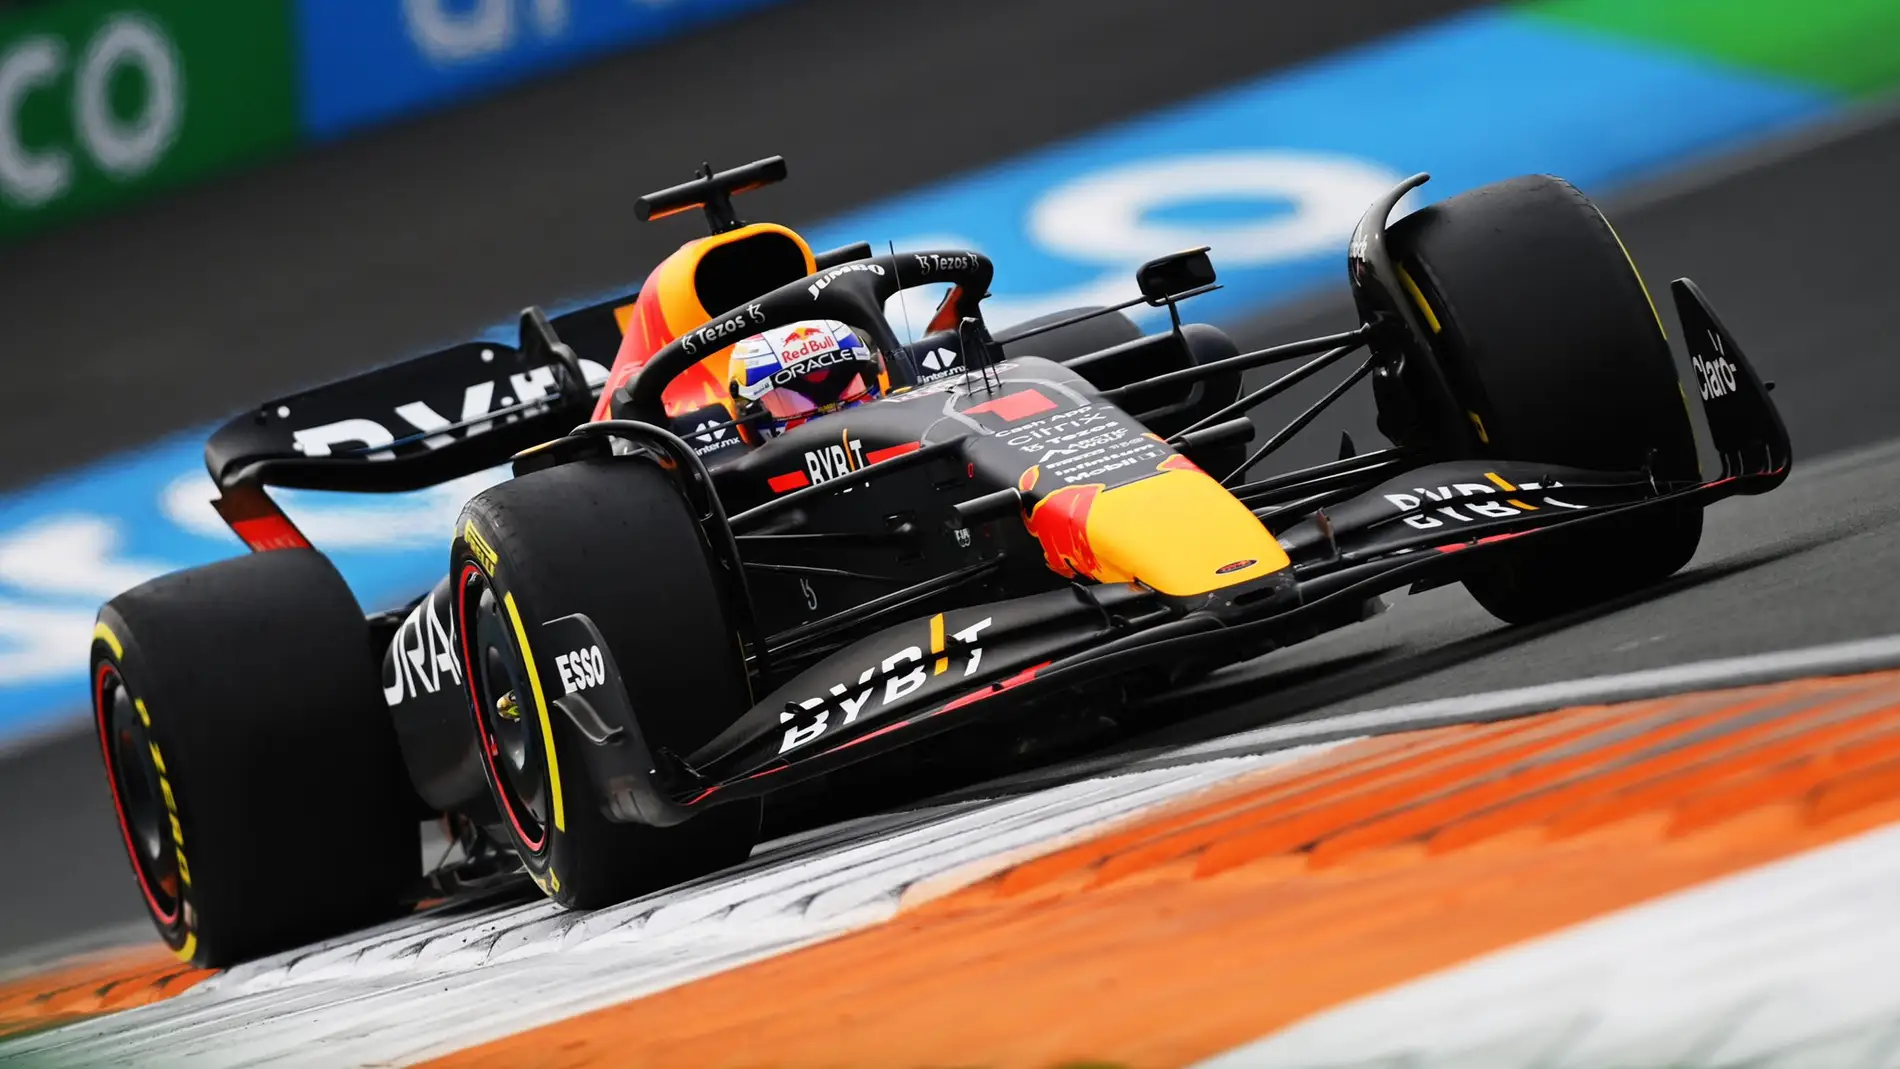 Cuarta victoria consecutiva de Max Verstappen